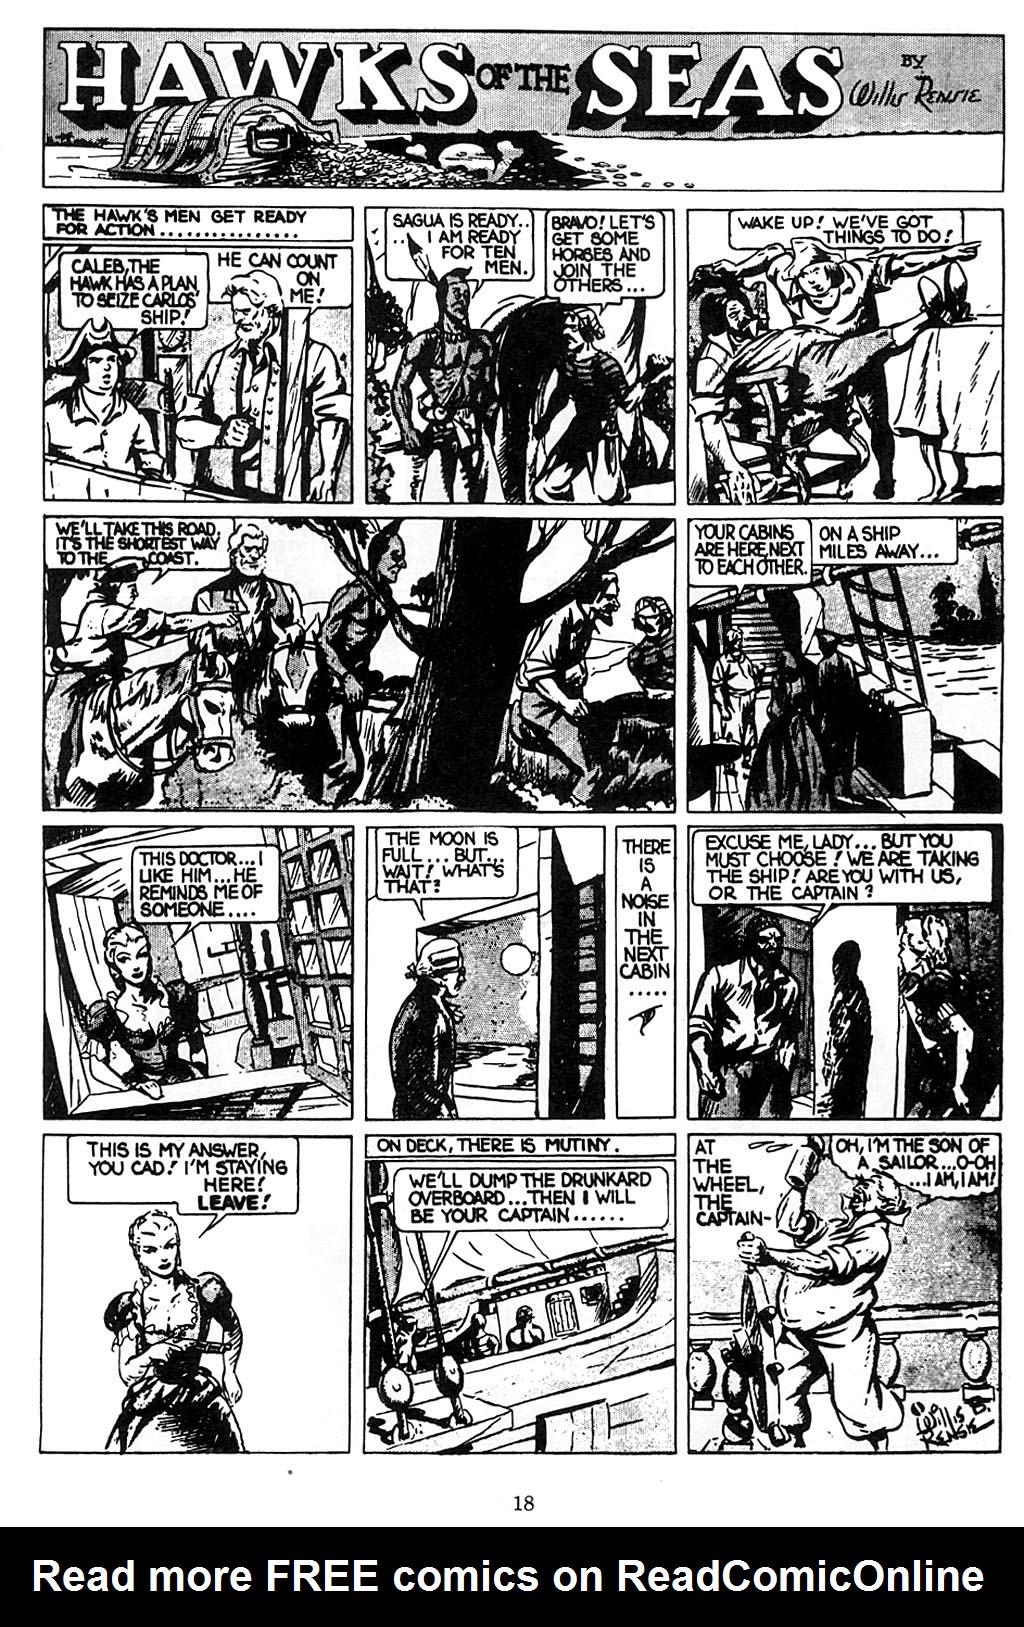 Read online Will Eisner's Hawks of the Seas comic -  Issue # TPB - 19